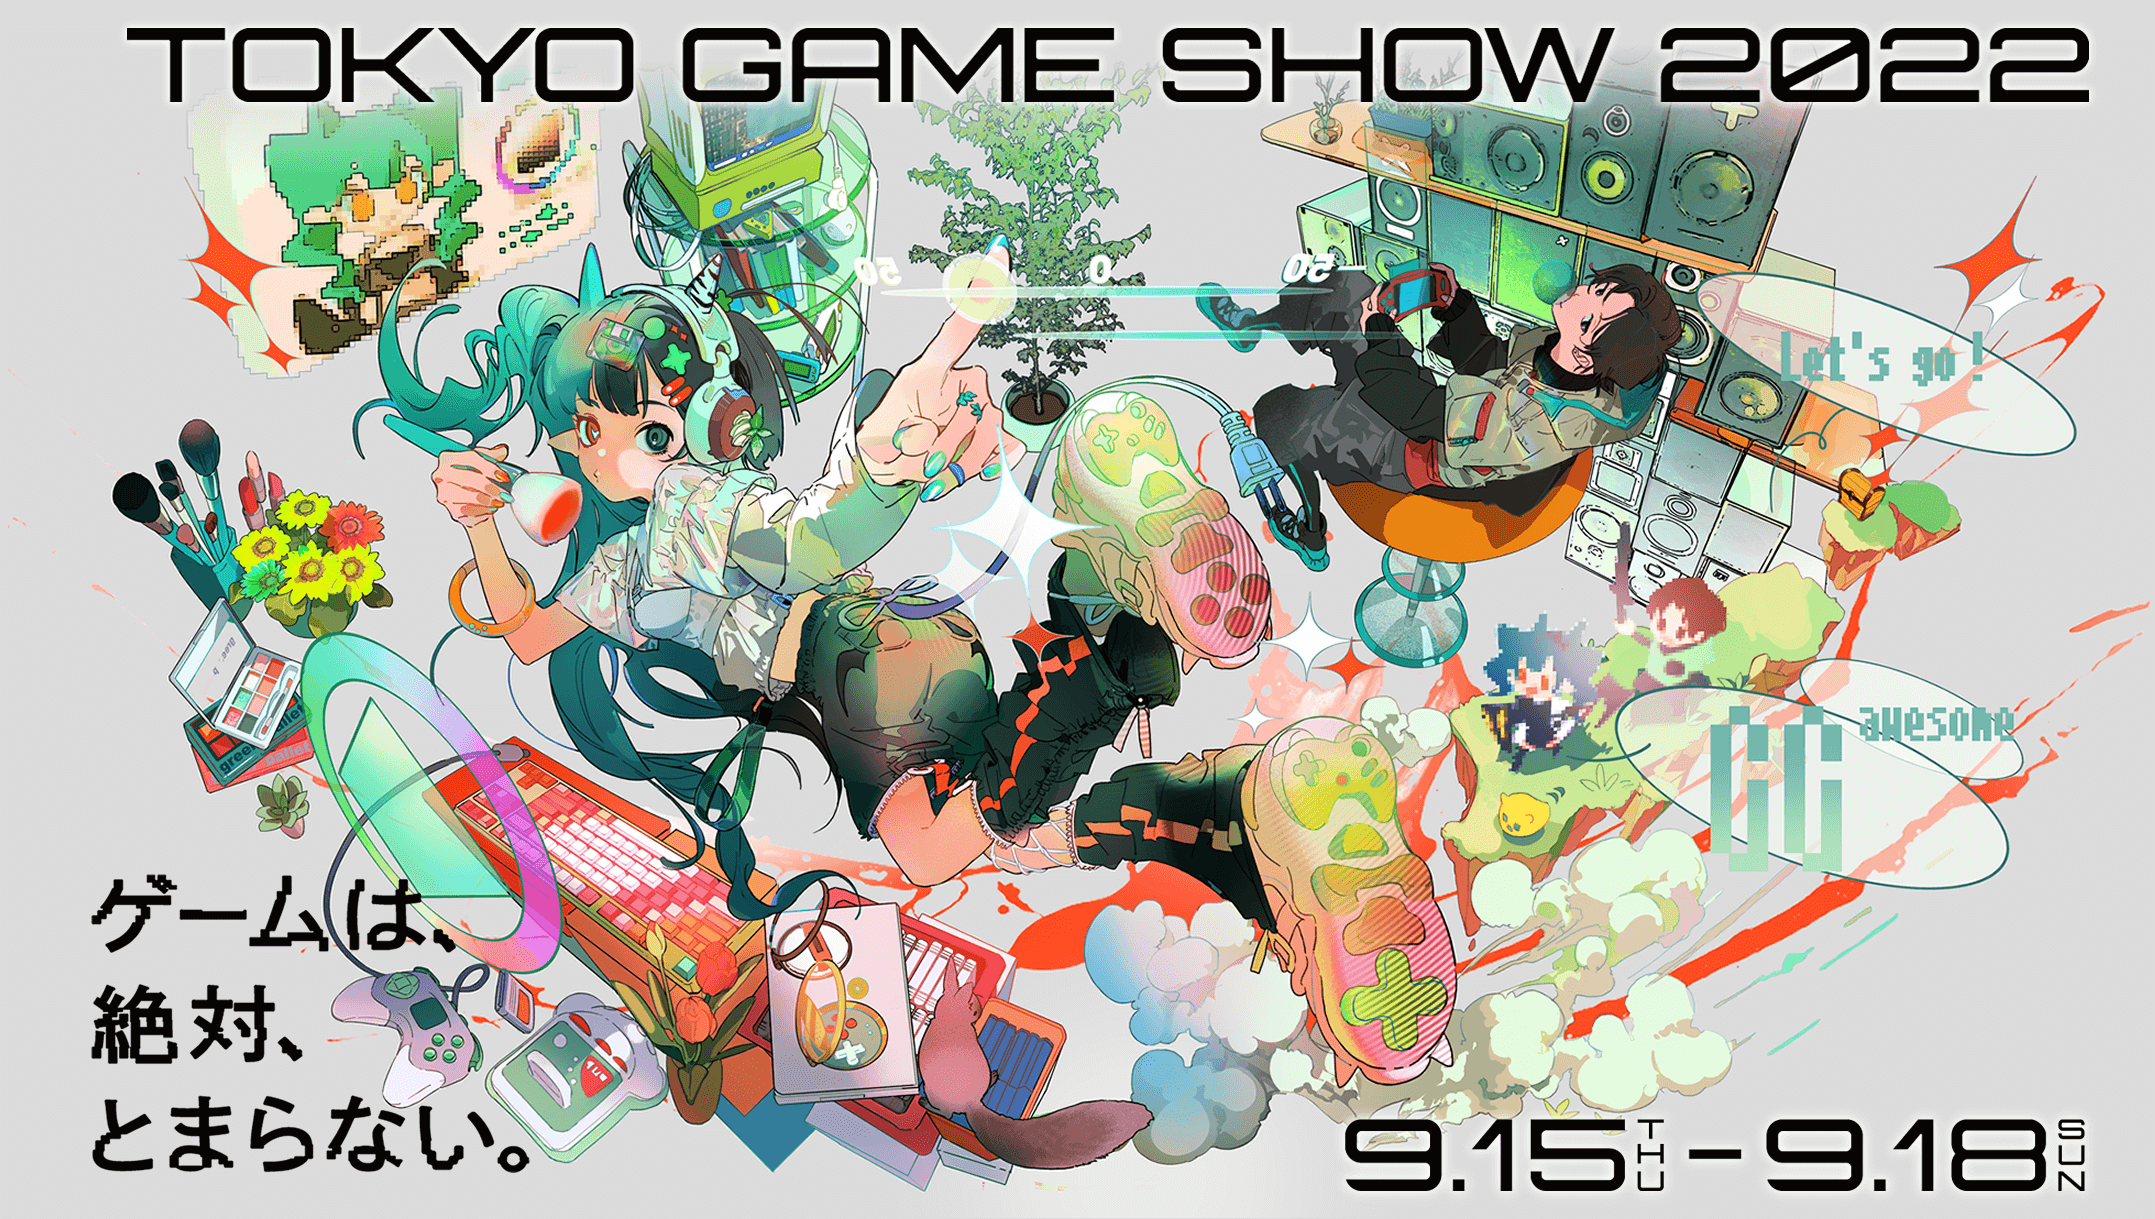 TOKYO GAME SHOW 2022 ニコニコ生放送